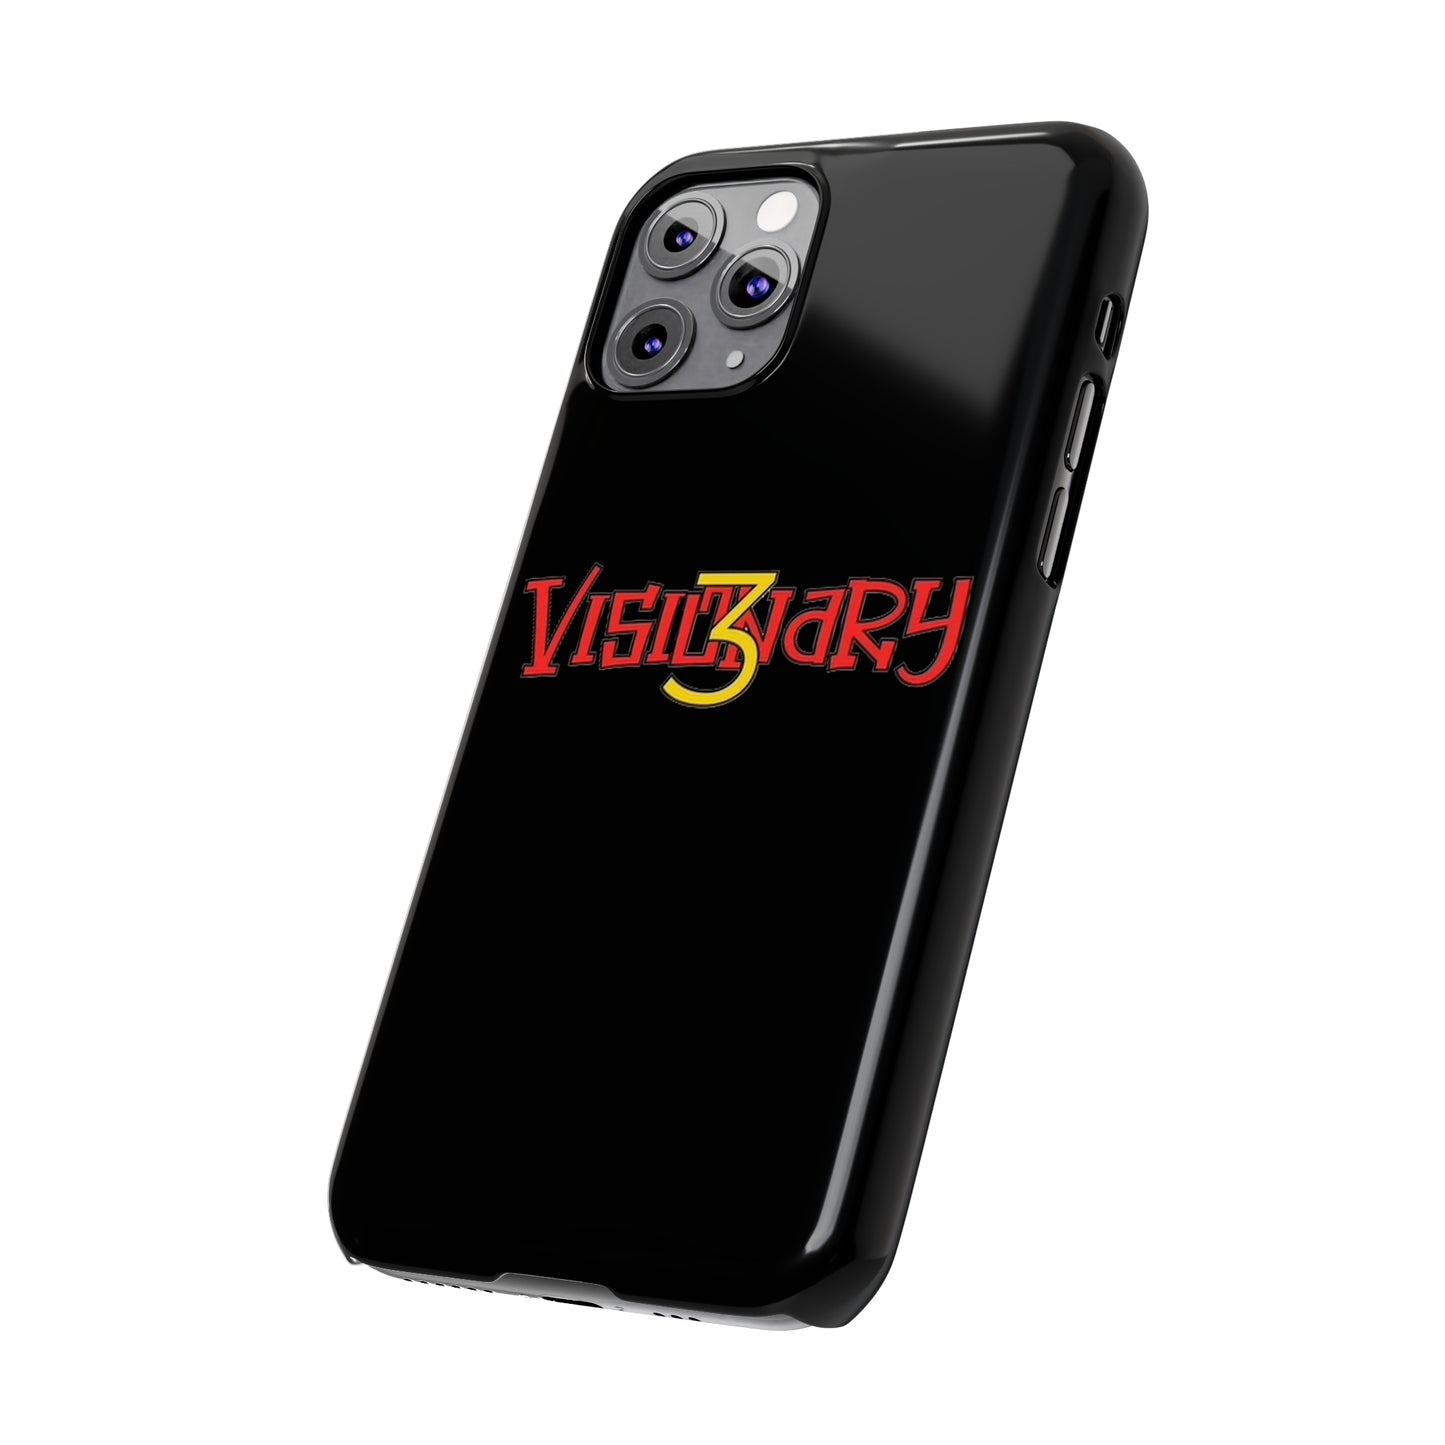 Black Visionary iPhone Case